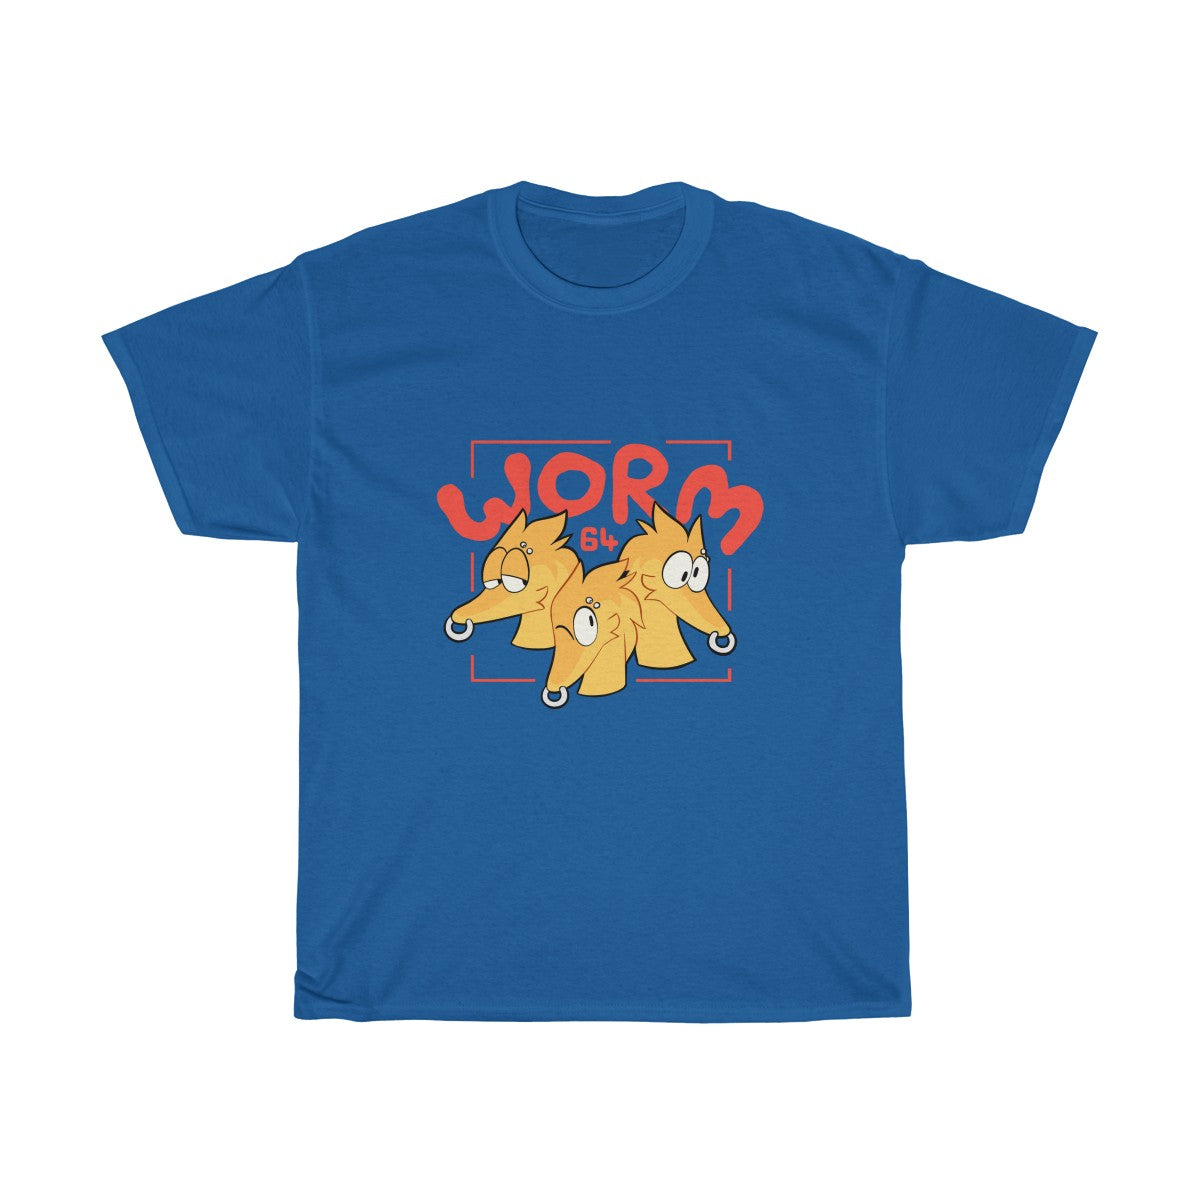 Worm 64 - T-Shirt T-Shirt Motfal Royal Blue S 